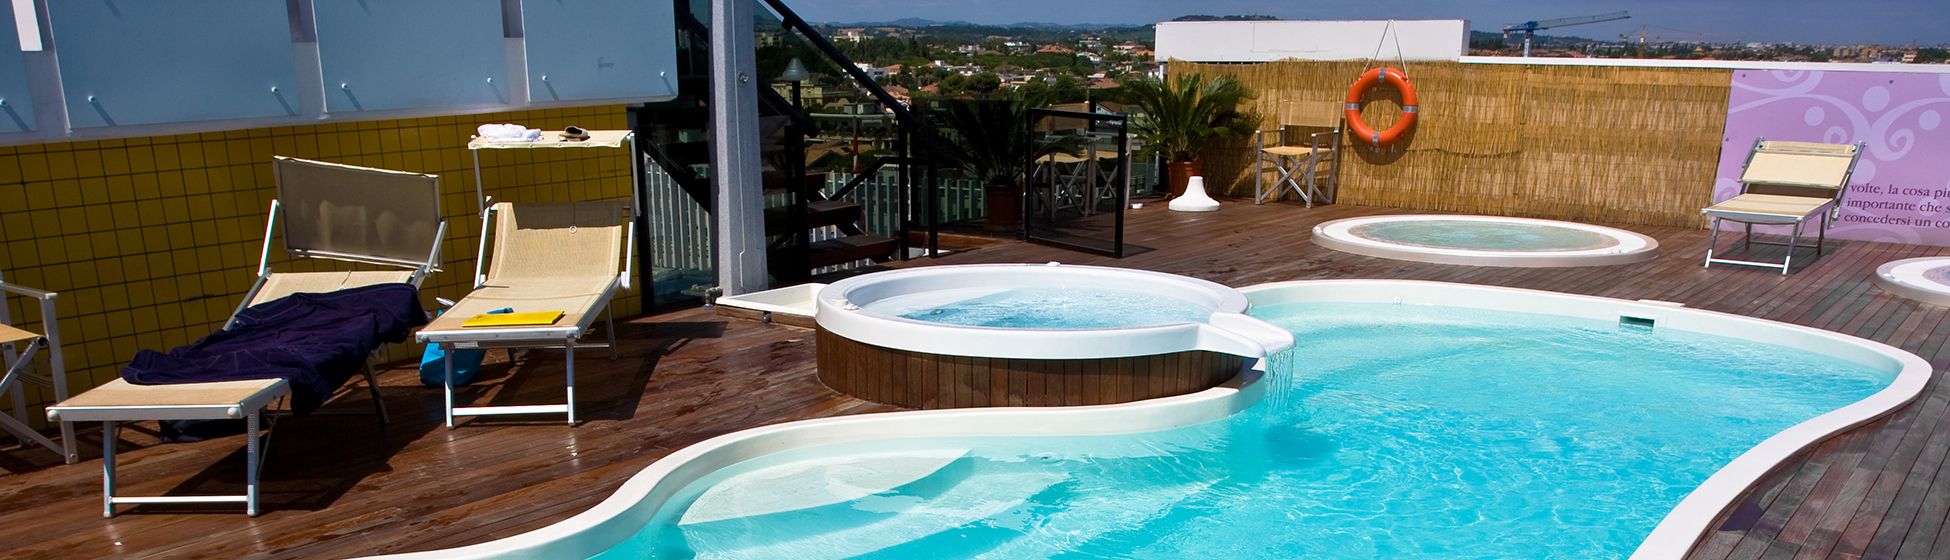 Location villa martinique avec piscine